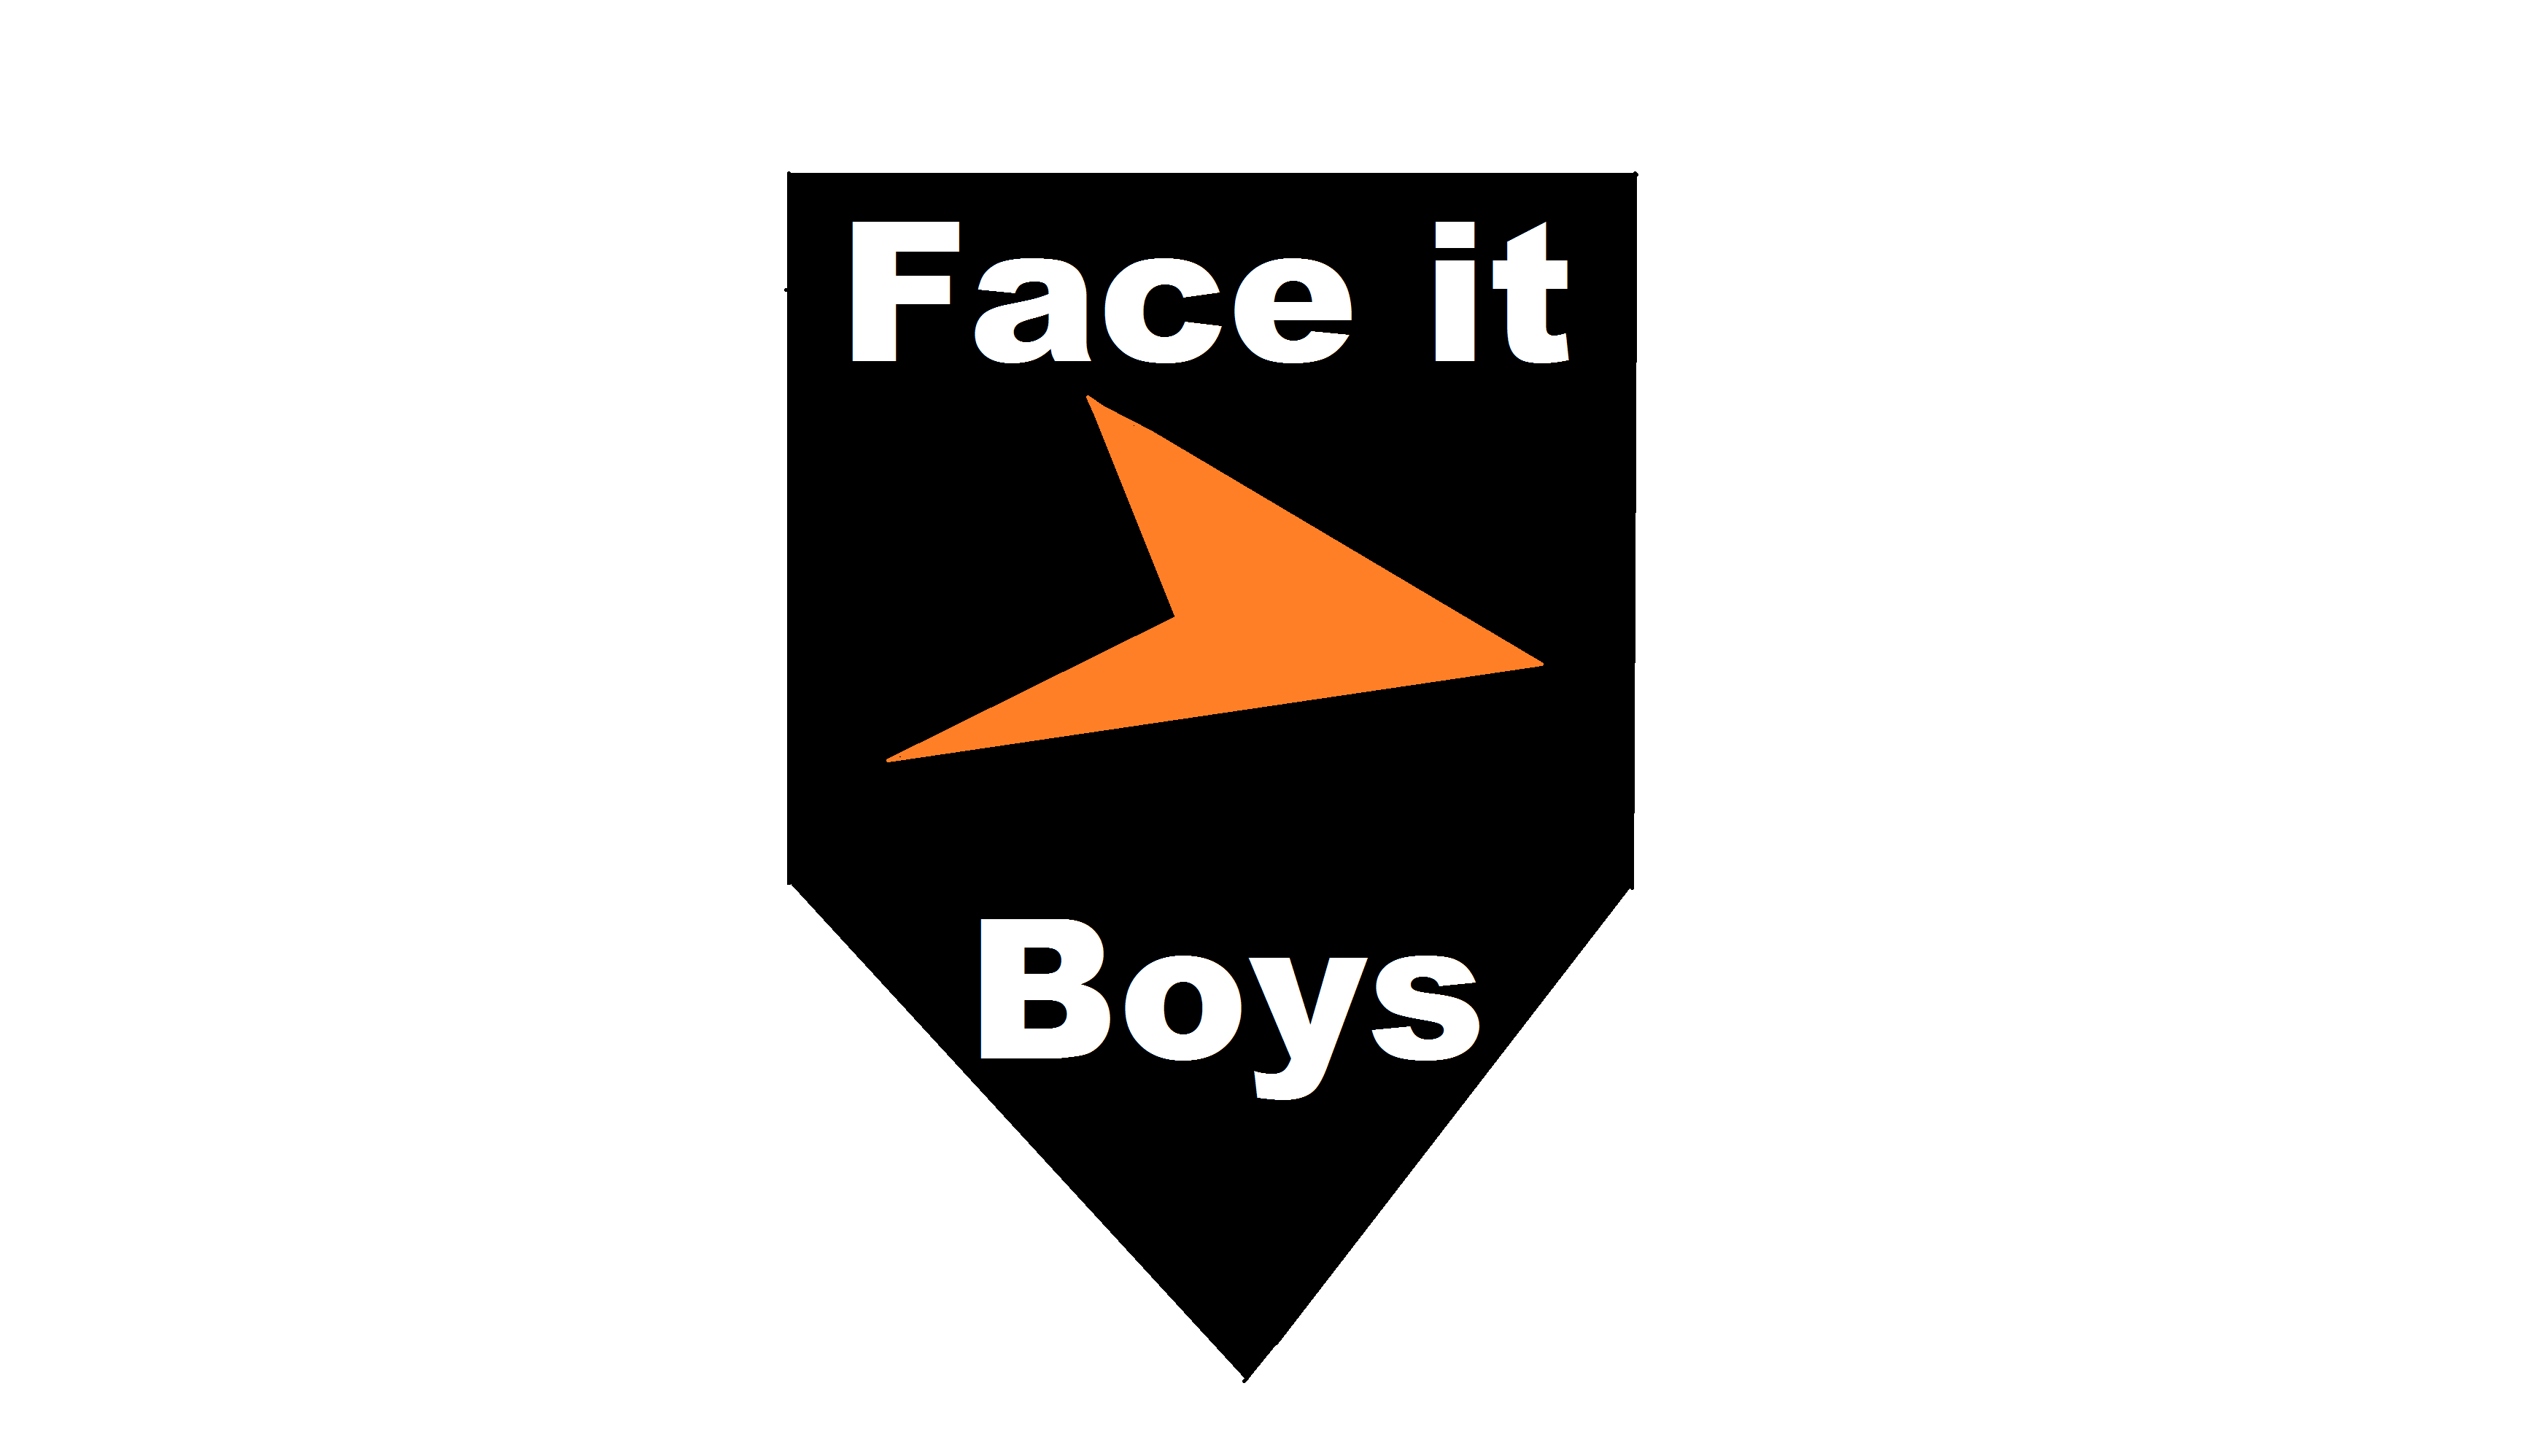 Face it Boys